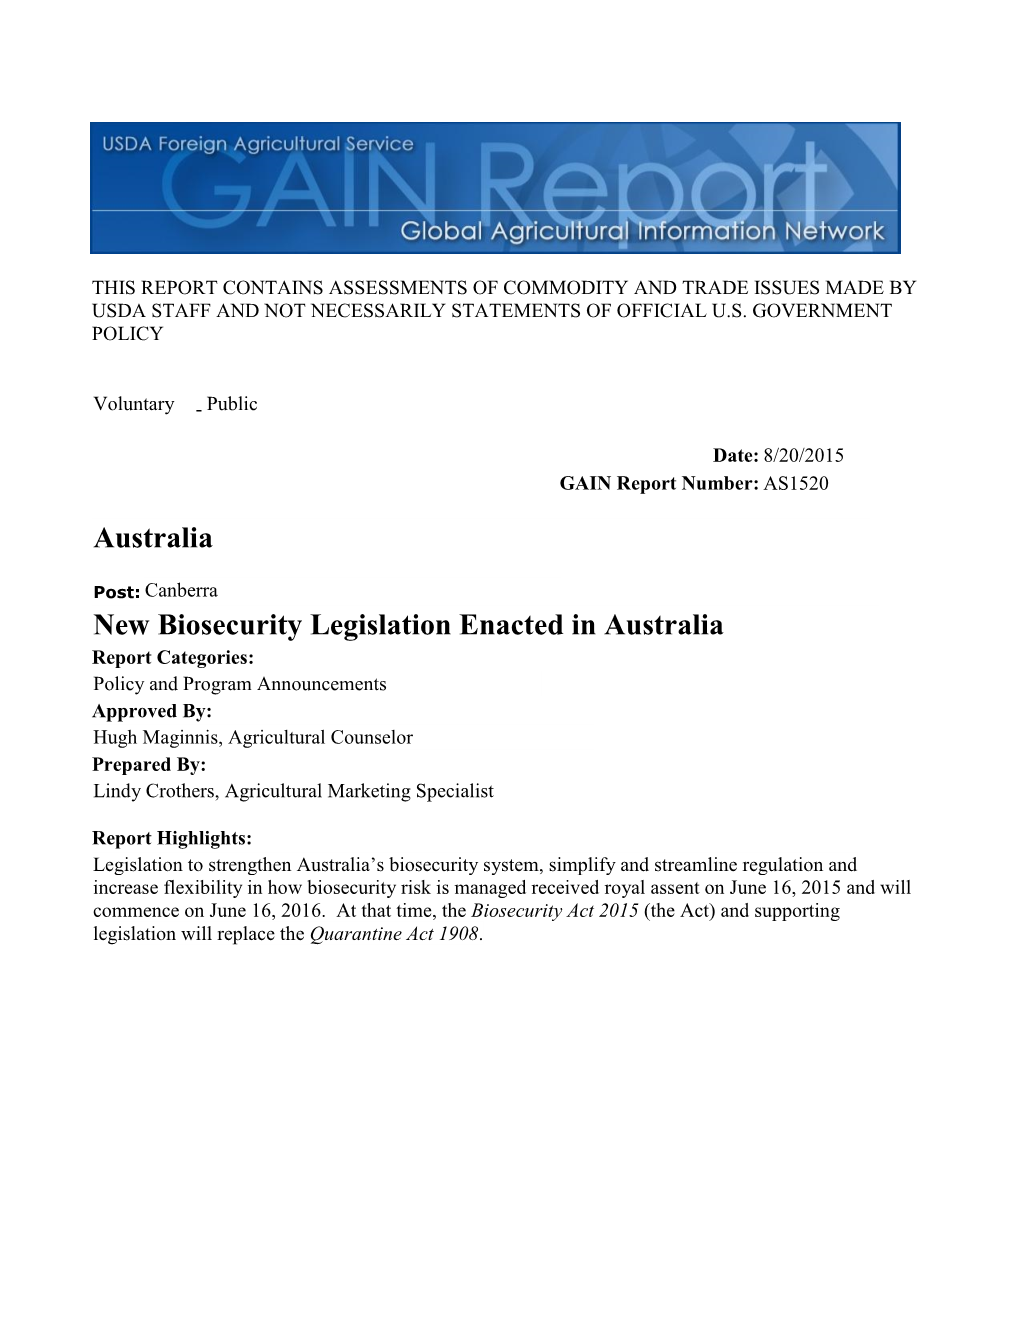 New Biosecurity Legislation Enacted in Australia Australia